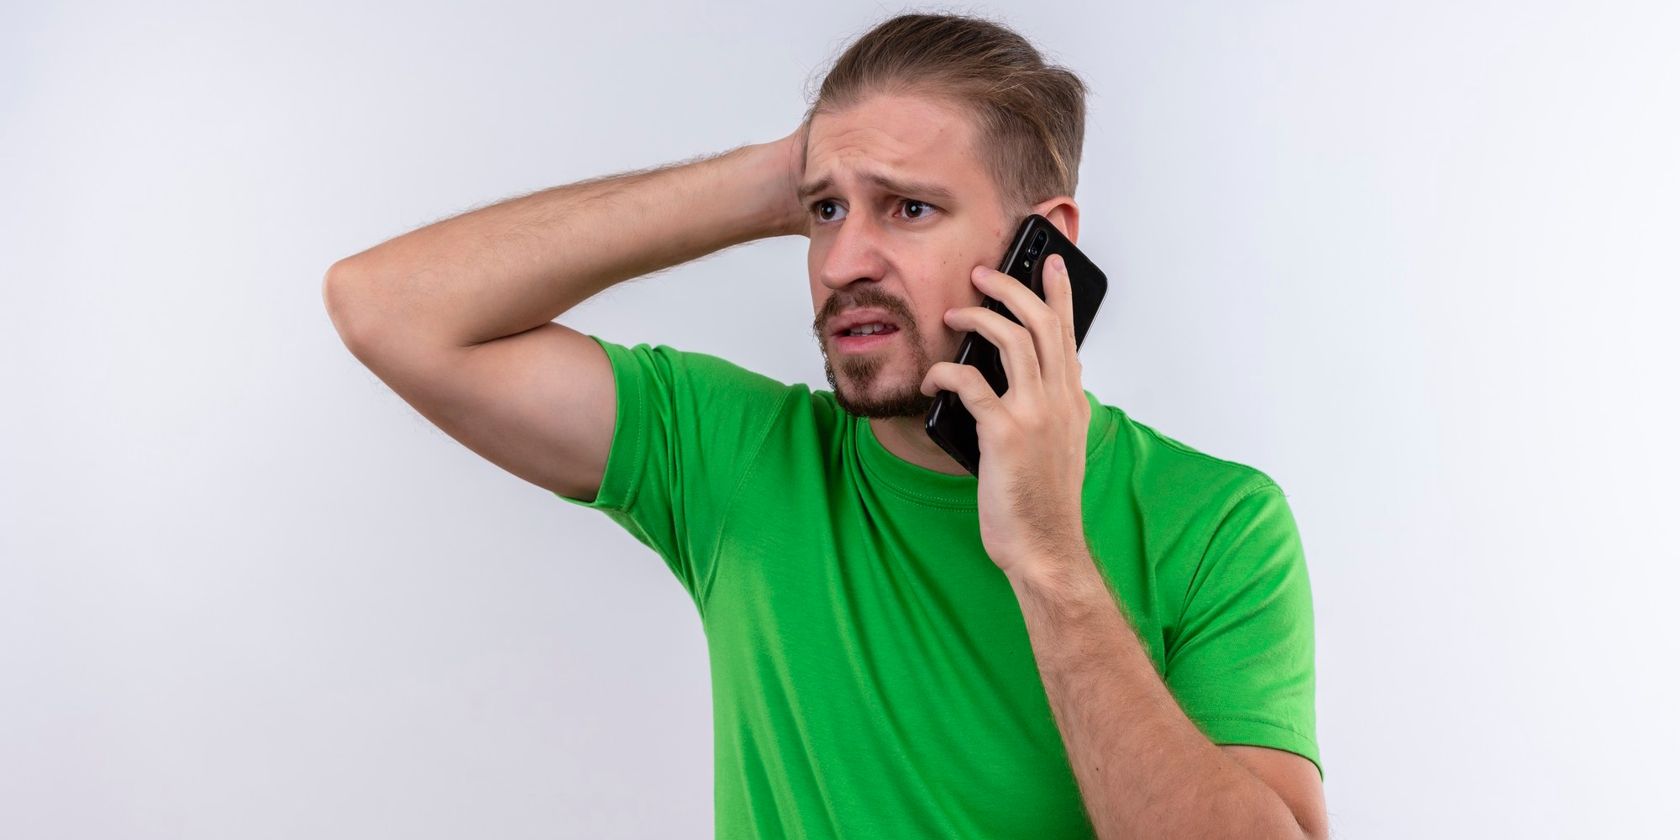 A man receiving a quid quo pro phone call